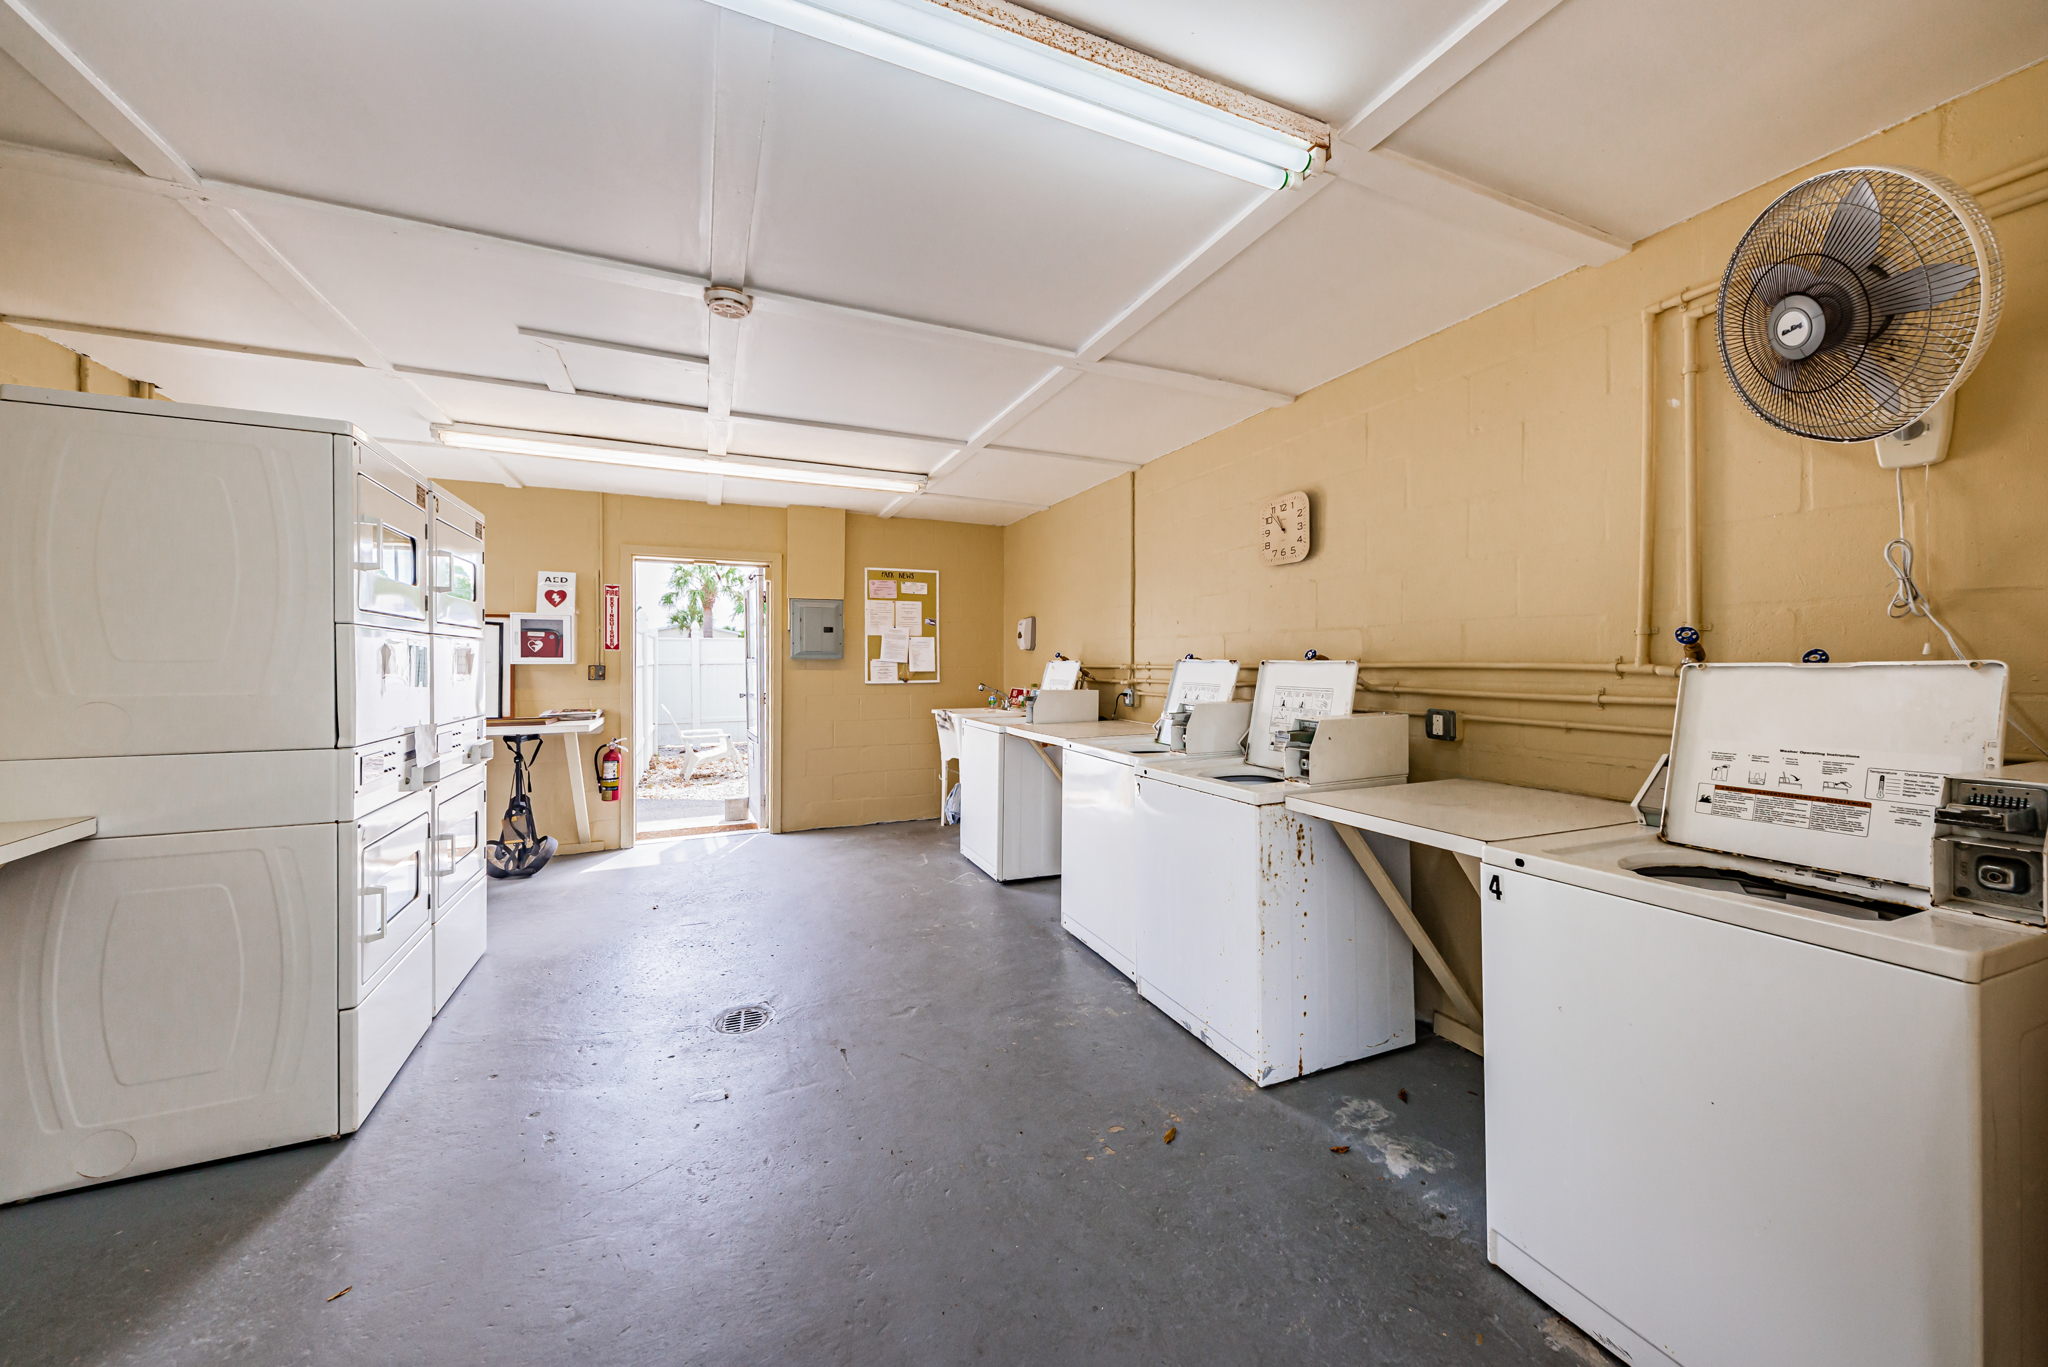 14-Community Laundry Room